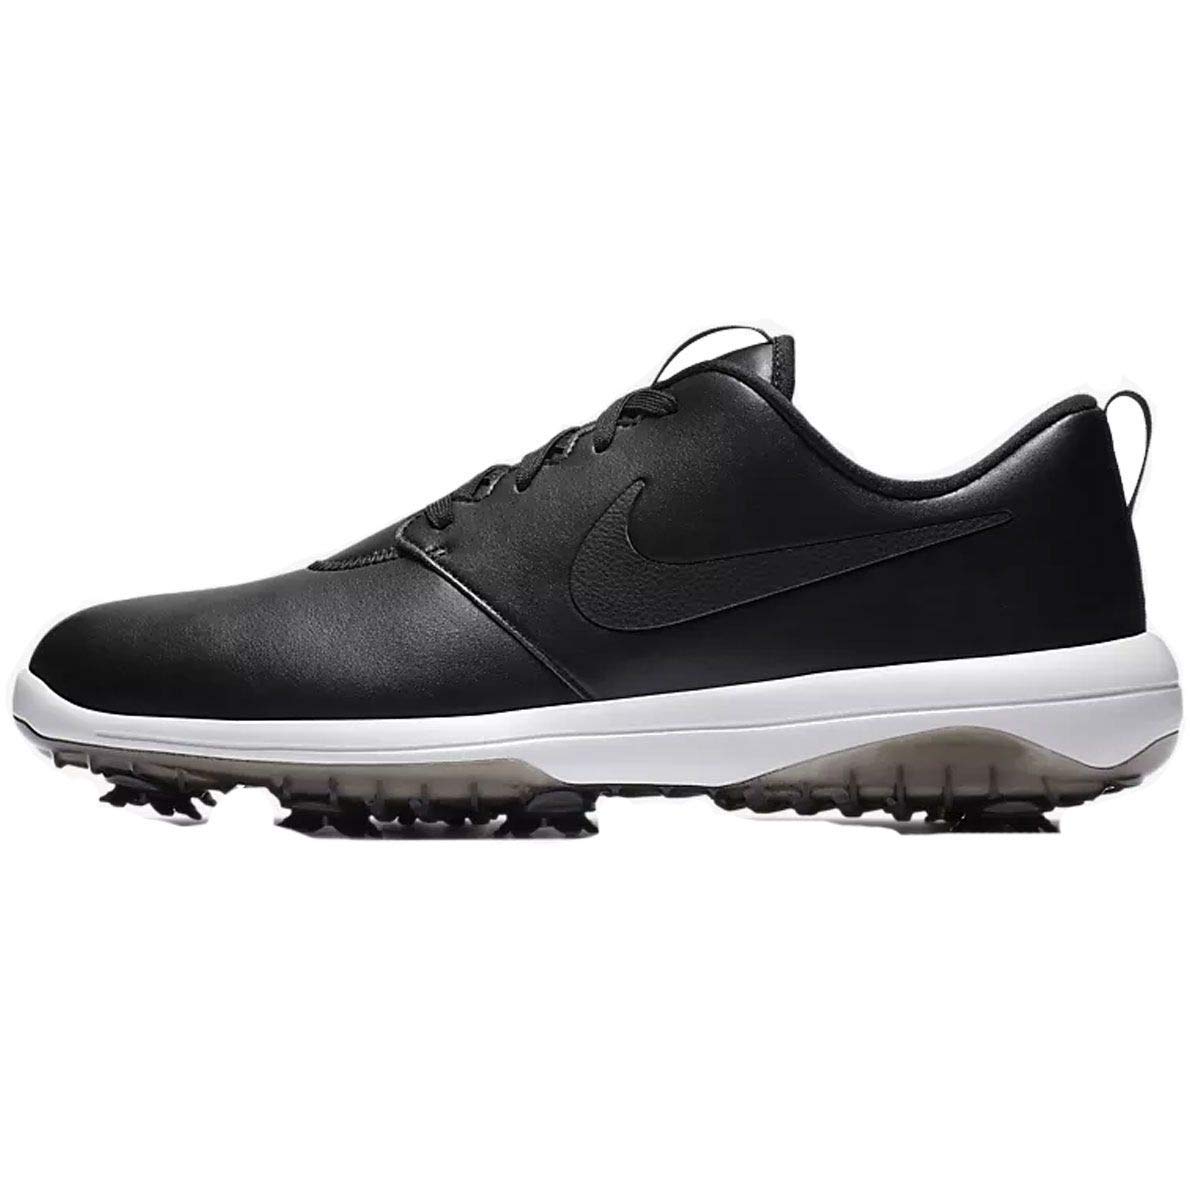 Nike New Mens Golf Shoe Roshe G Tour (Black/Summit White, 8.5)